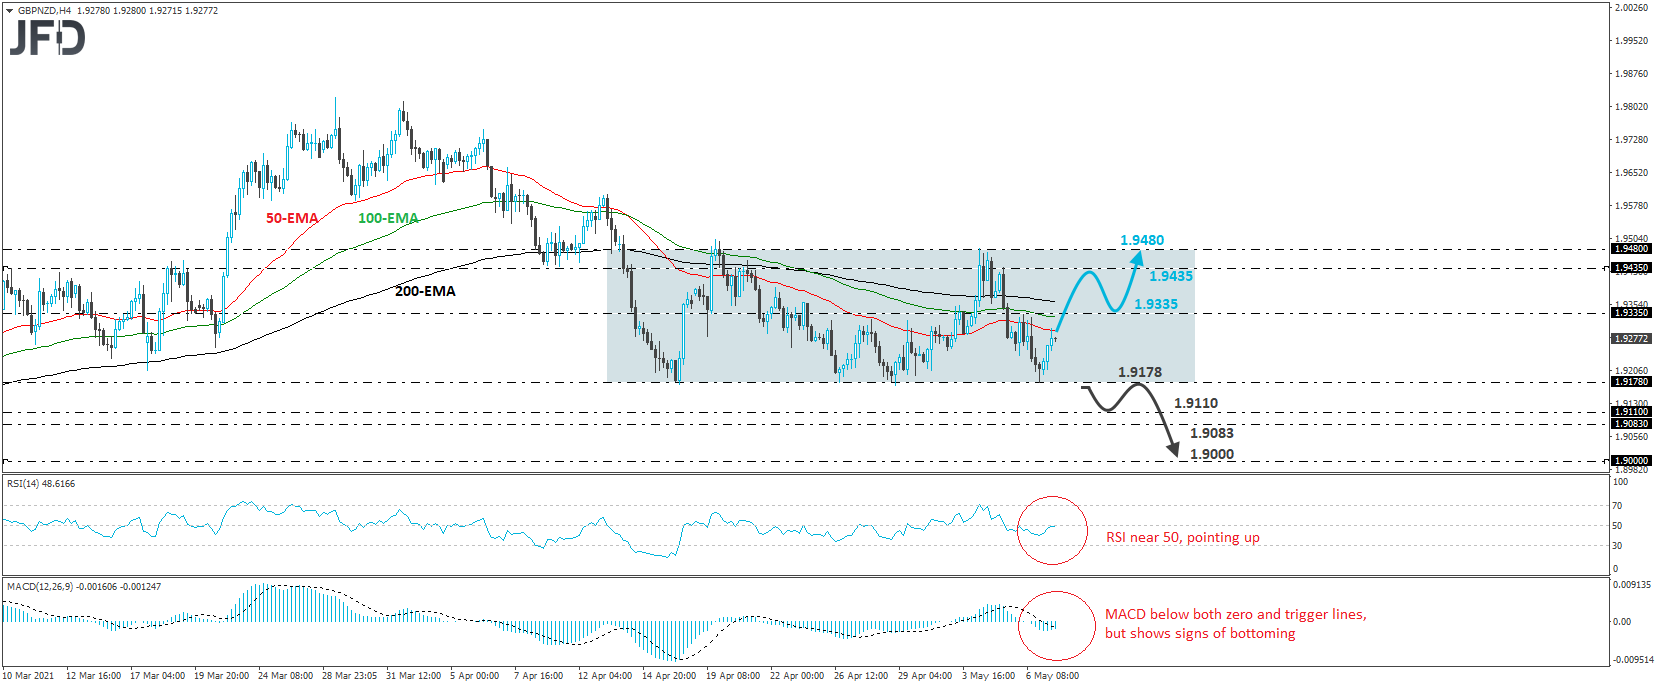 GBP/NZD 4-hour chart technical analysis